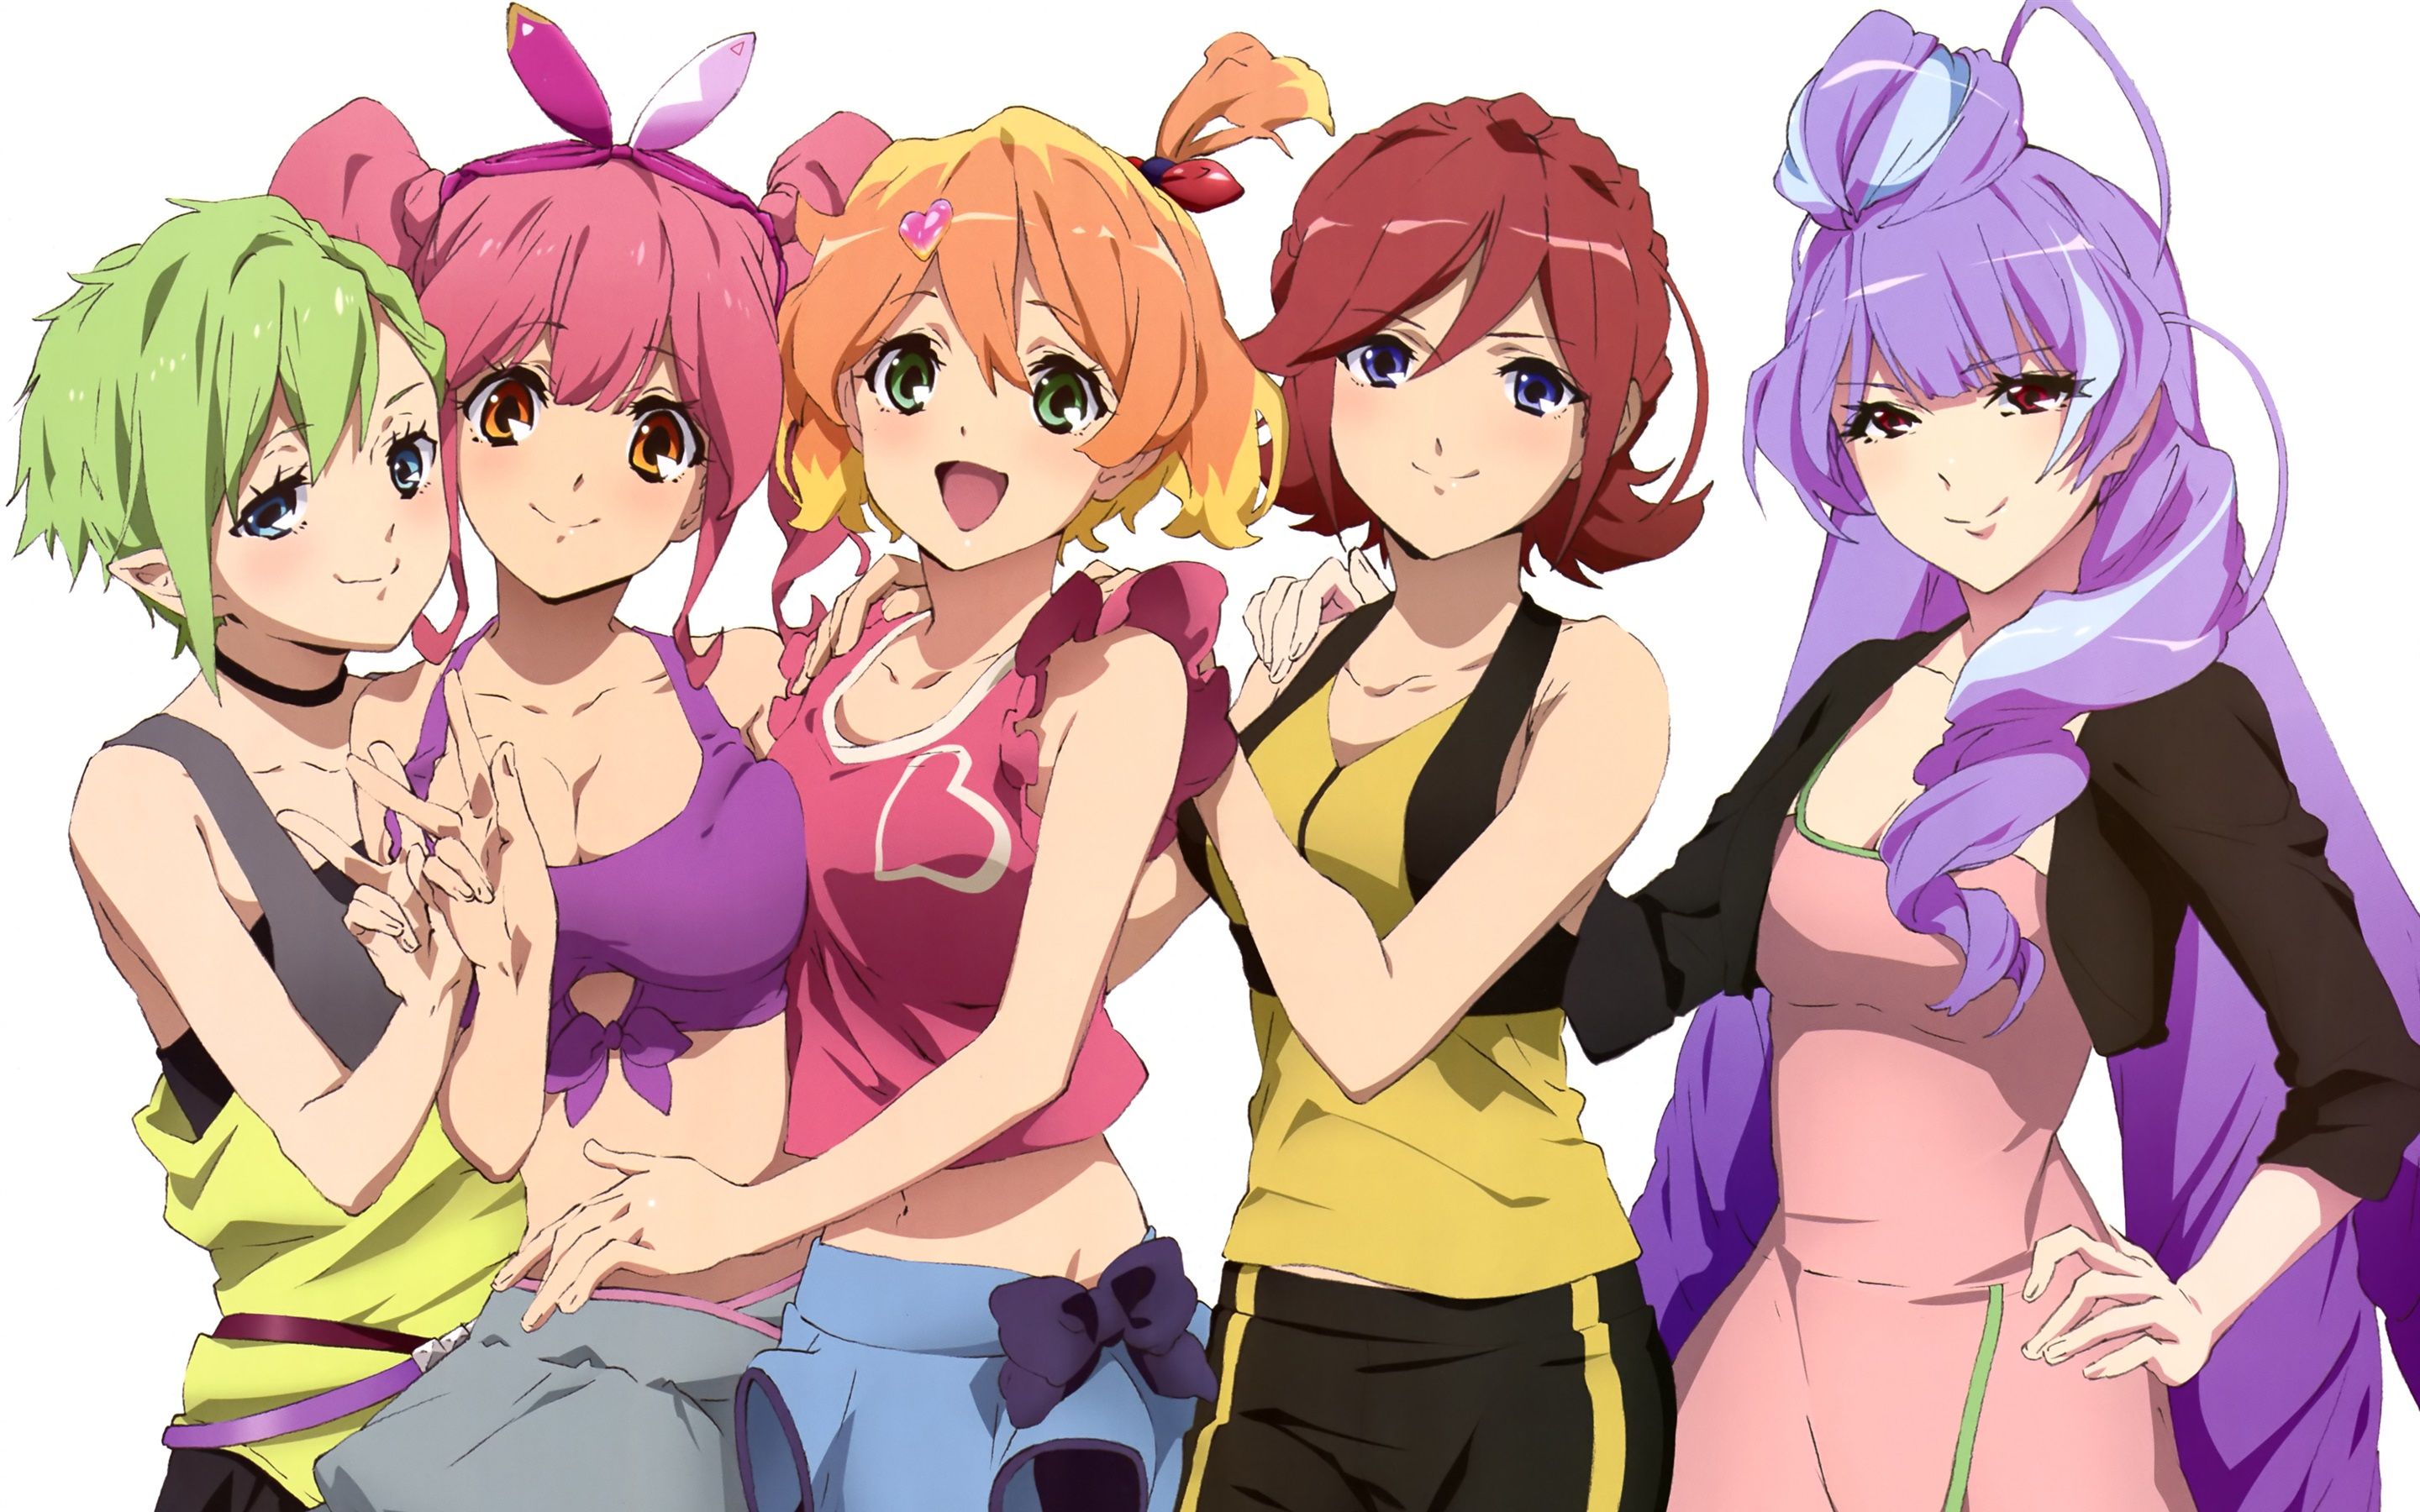 Wallpaper Macross, five anime girls 3840x2160 UHD 4K Picture, Image